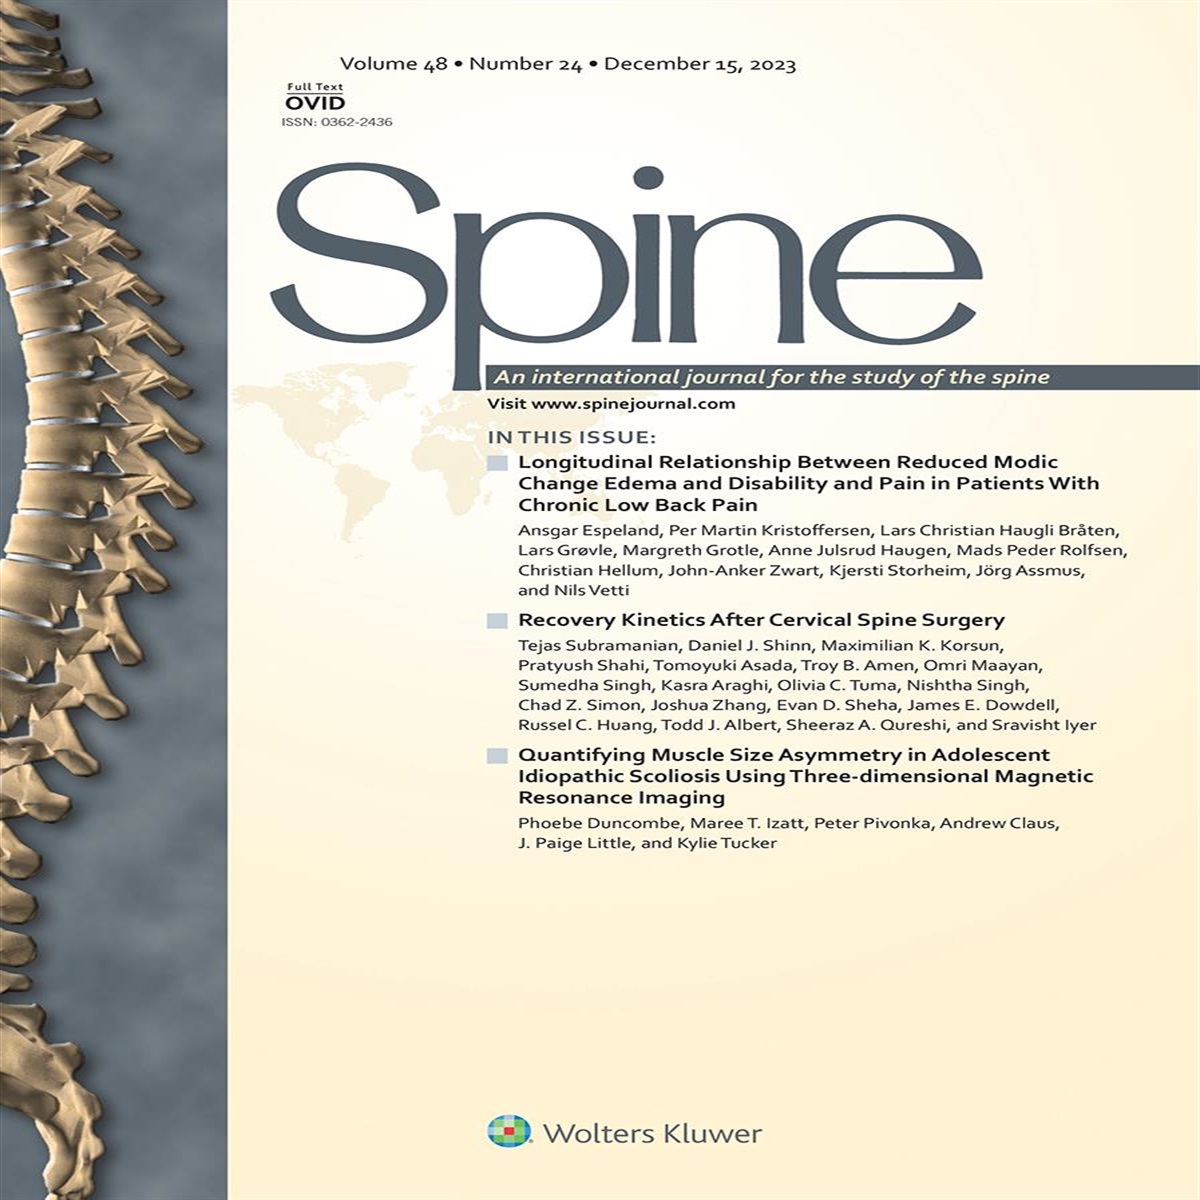 Proximal Junction Failure in Spine Surgery: Integrating Geometrical and Biomechanical Global Descriptors Improves GAP Score-Based Assessment: Erratum